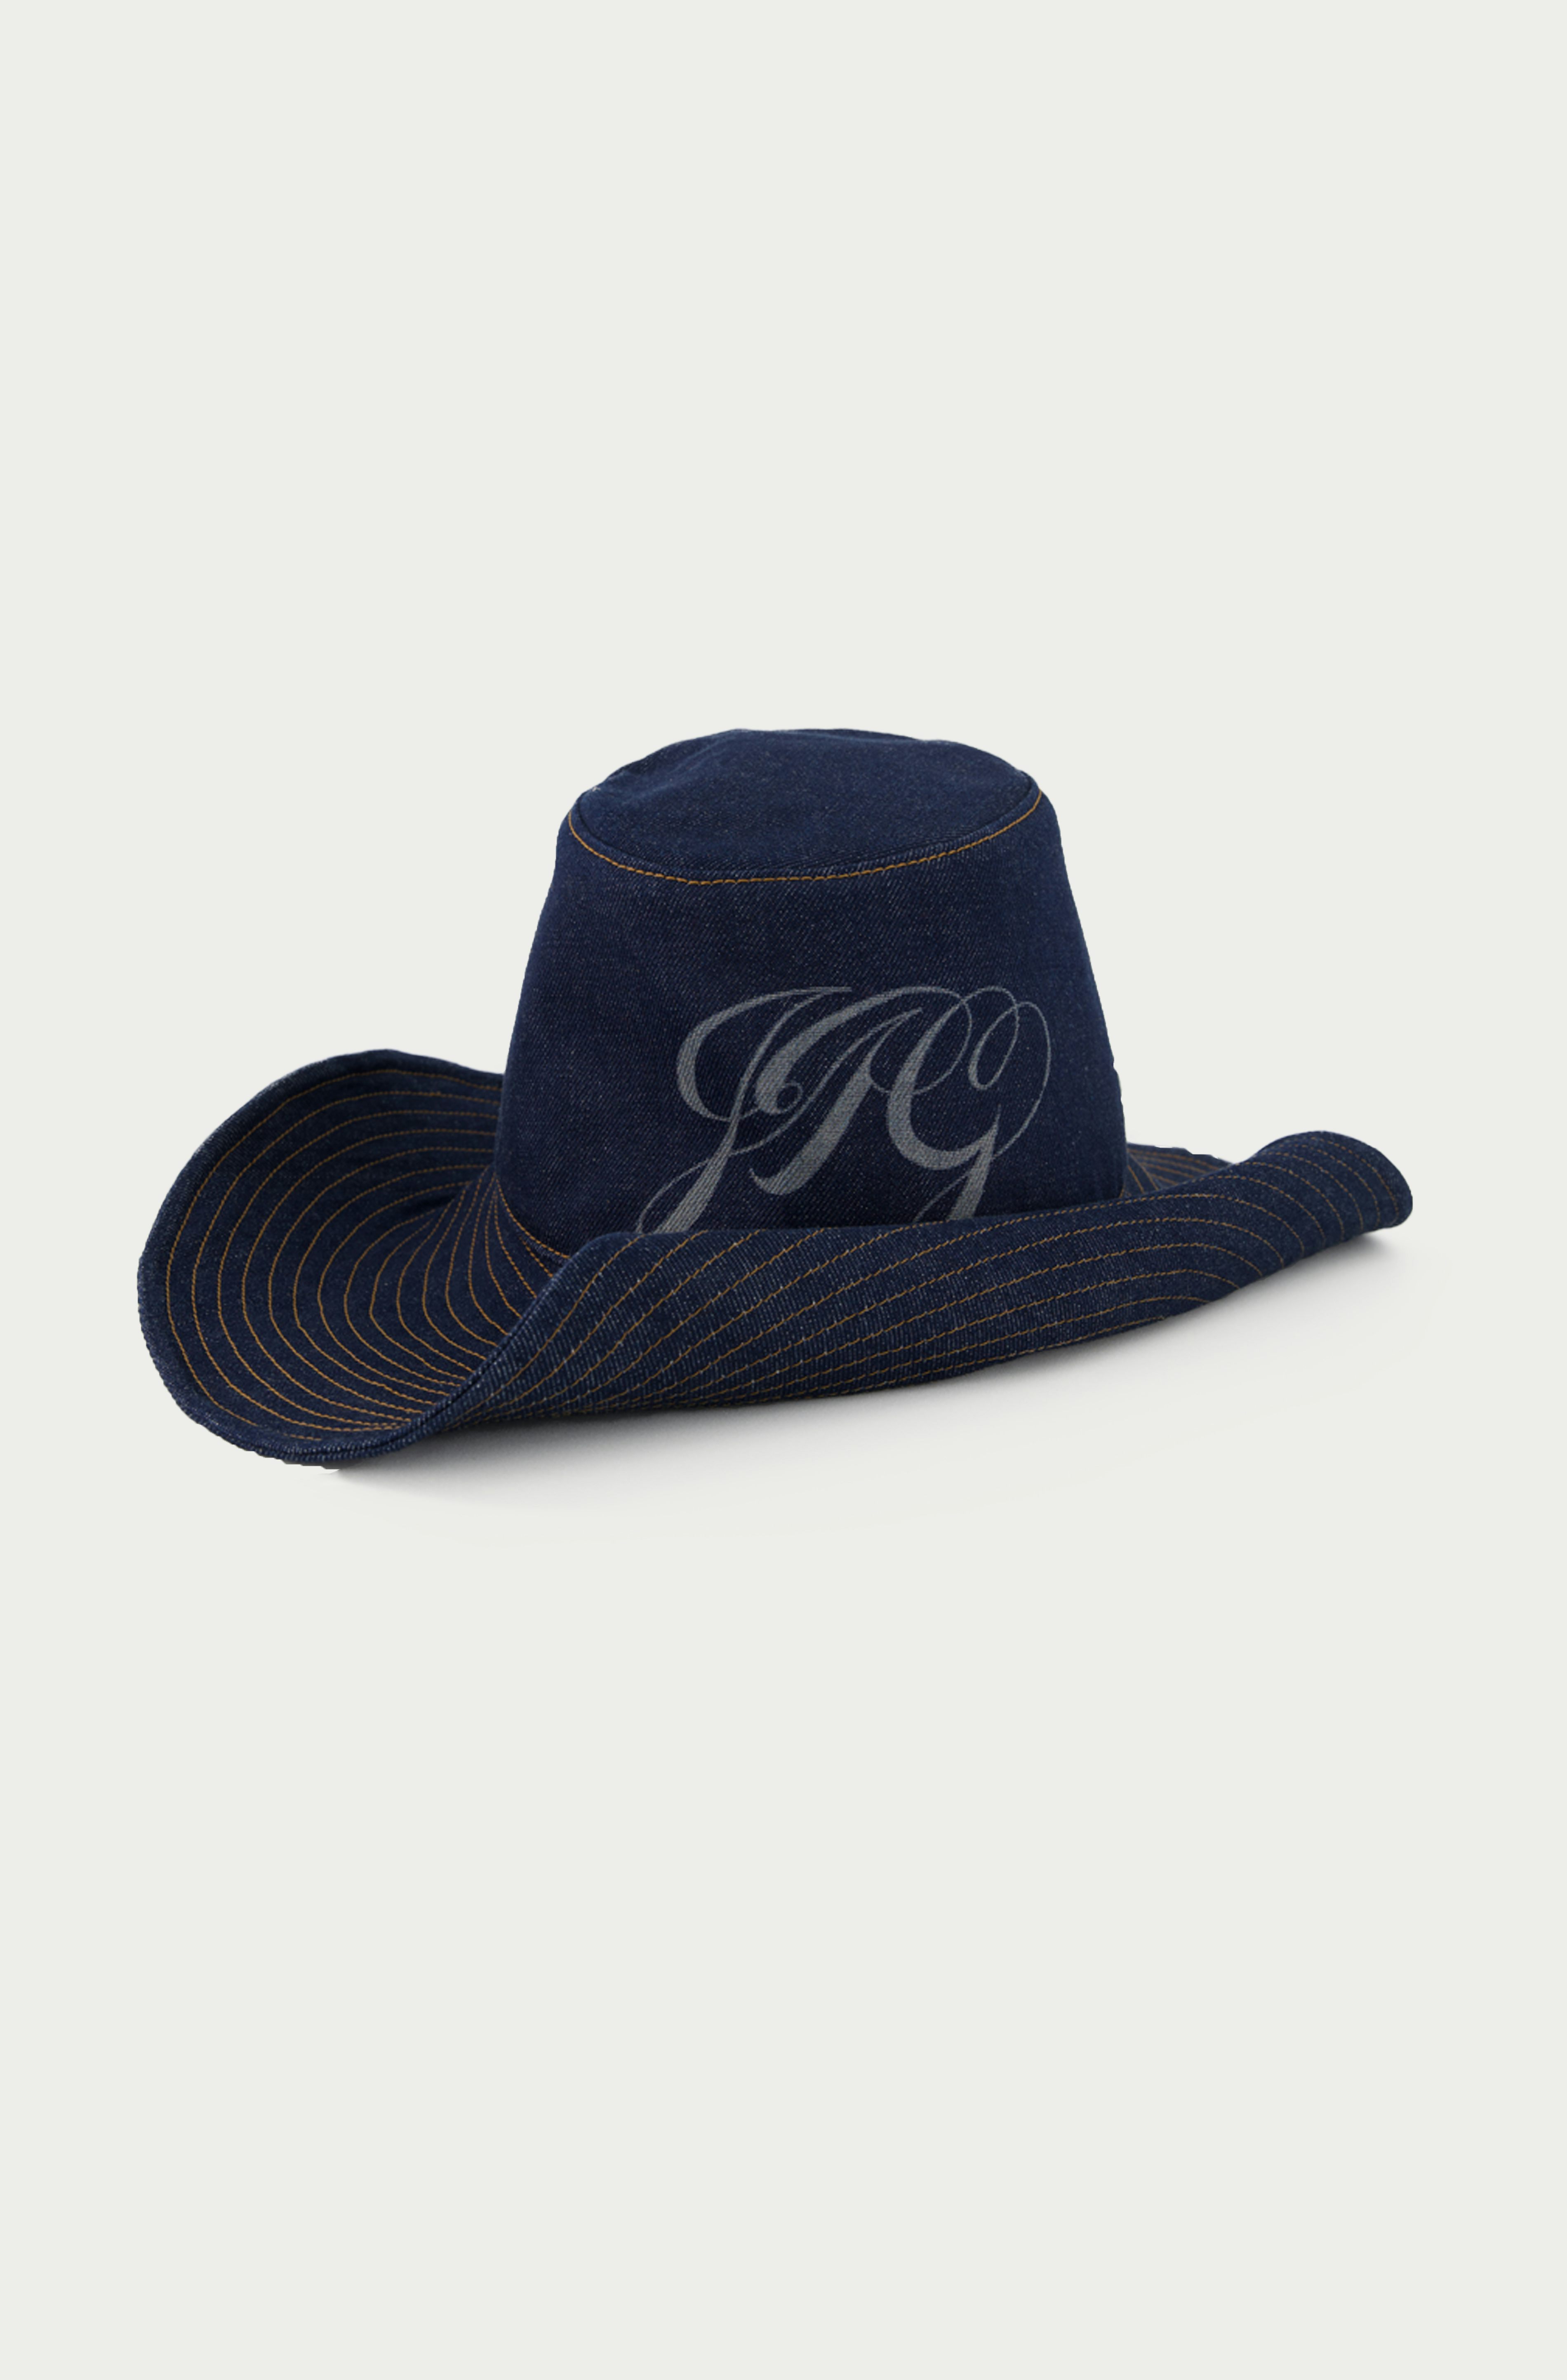 Exclusive - The JPG Bucket hat hover